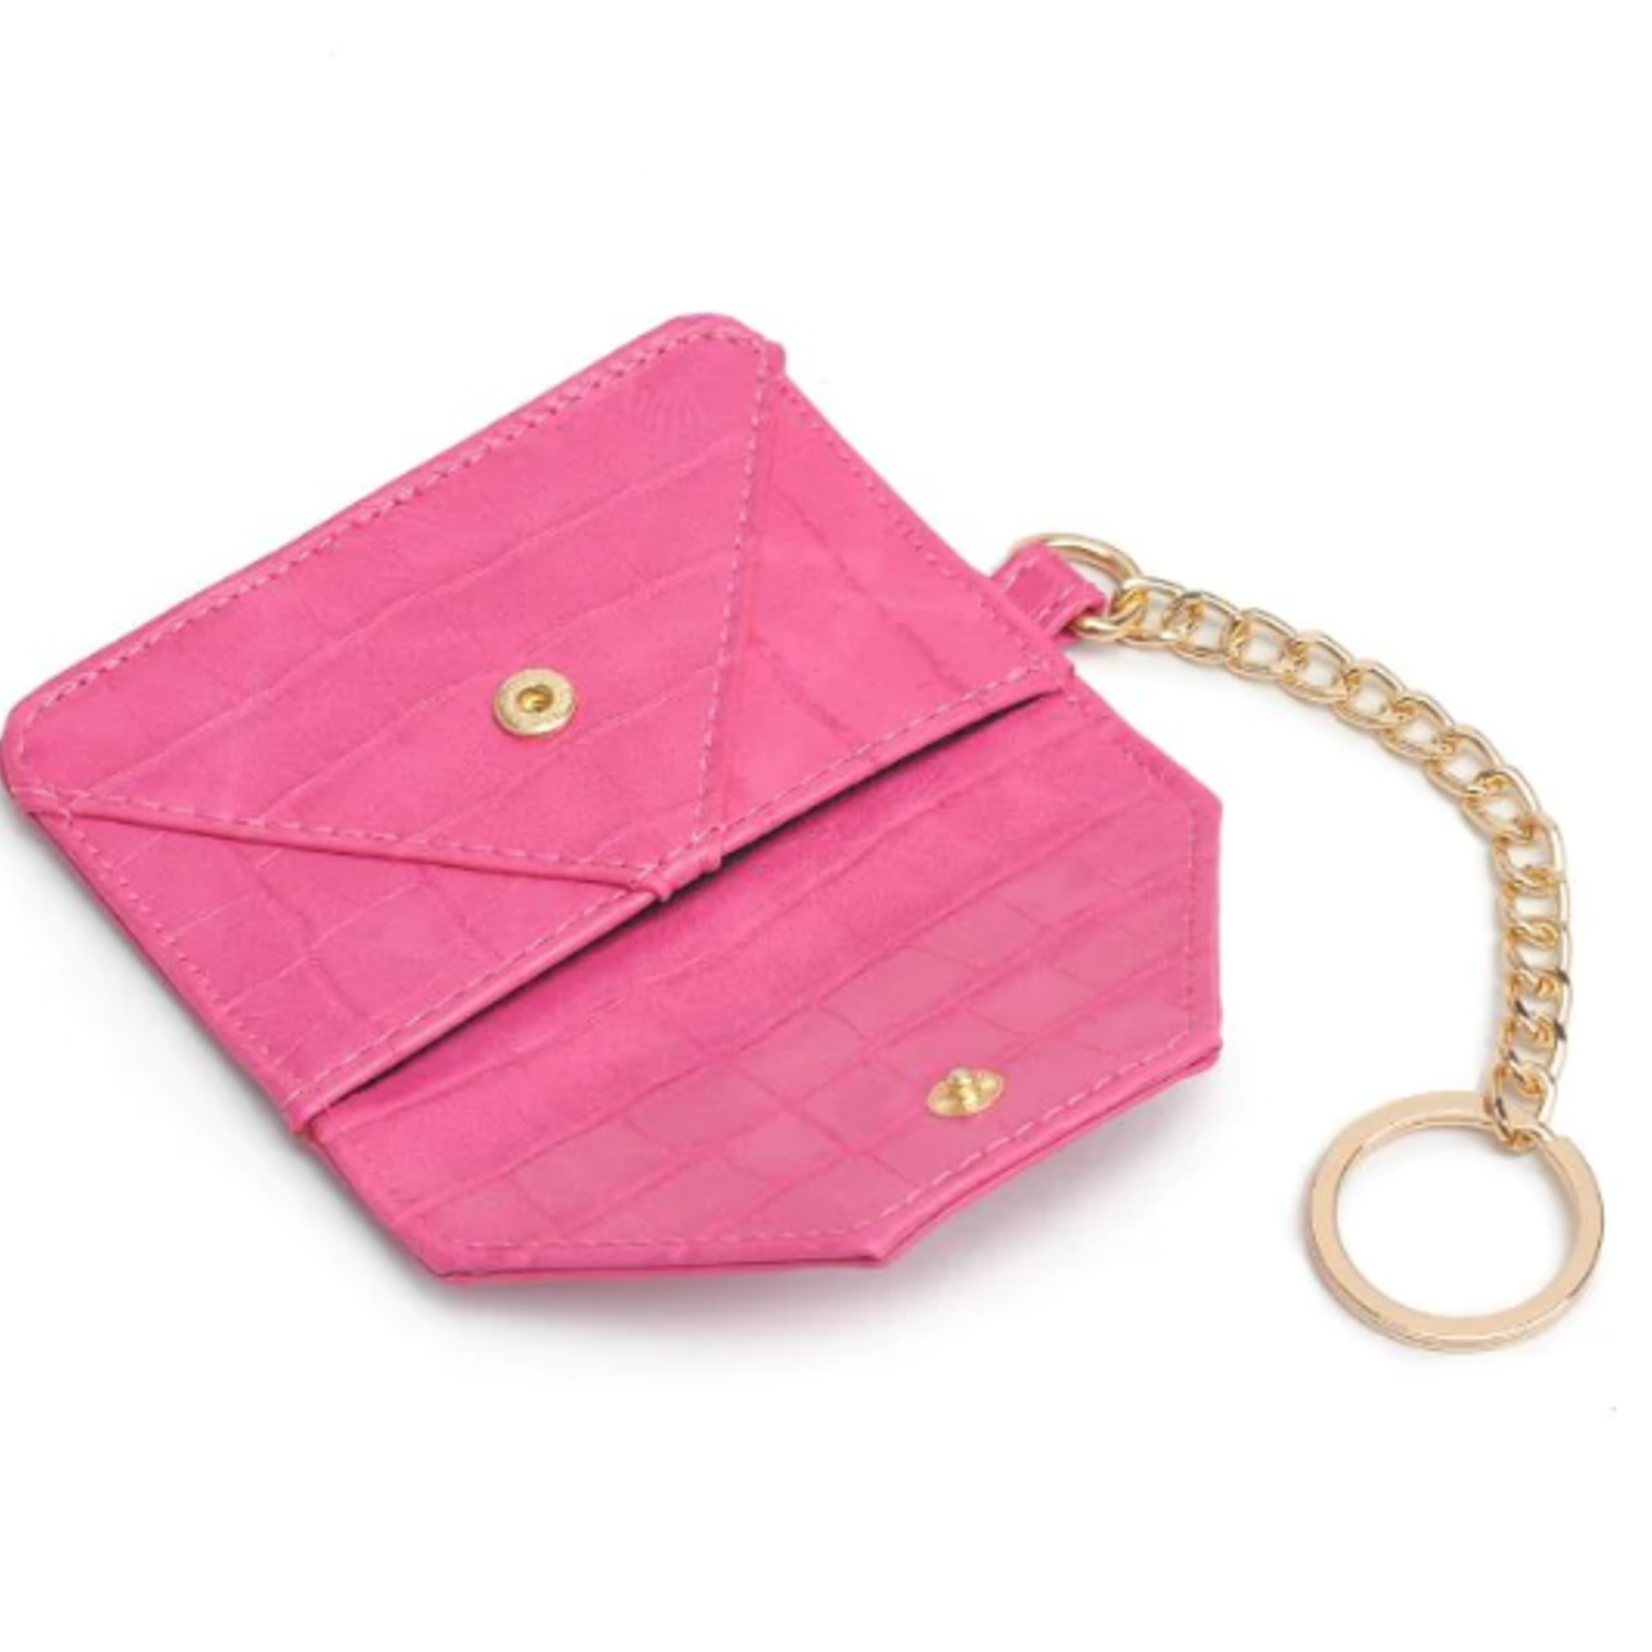 Gia Card Holder Wallet Pink